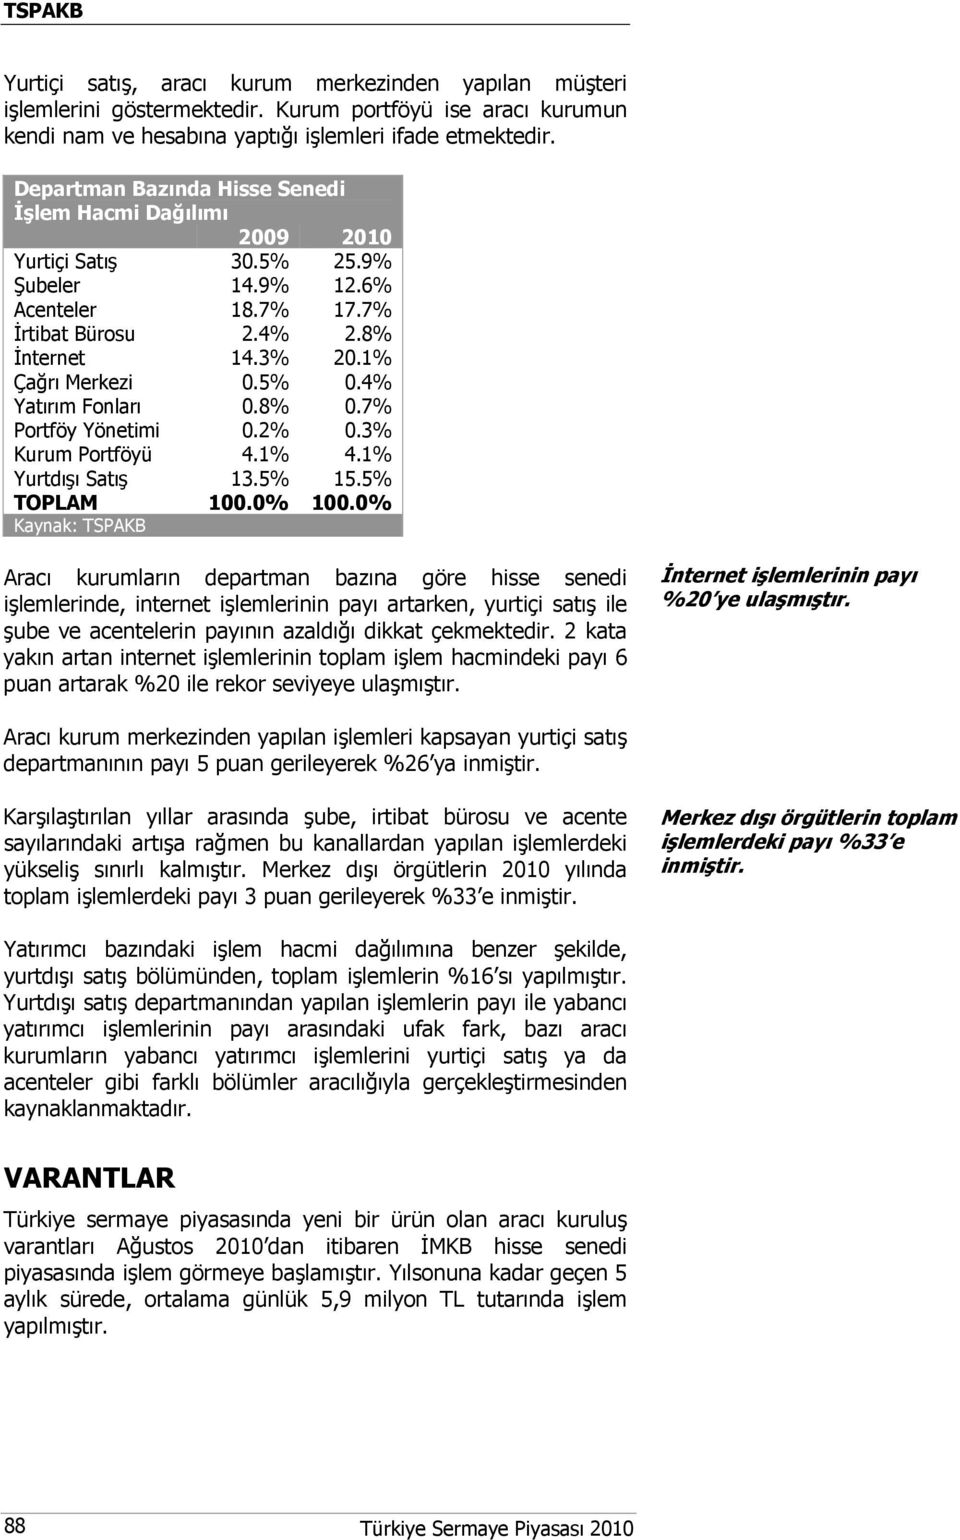 4% Yatırım Fonları 0.8% 0.7% Portföy Yönetimi 0.2% 0.3% Kurum Portföyü 4.1% 4.1% Yurtdışı Satış 13.5% 15.5% TOPLAM 100.0% 100.